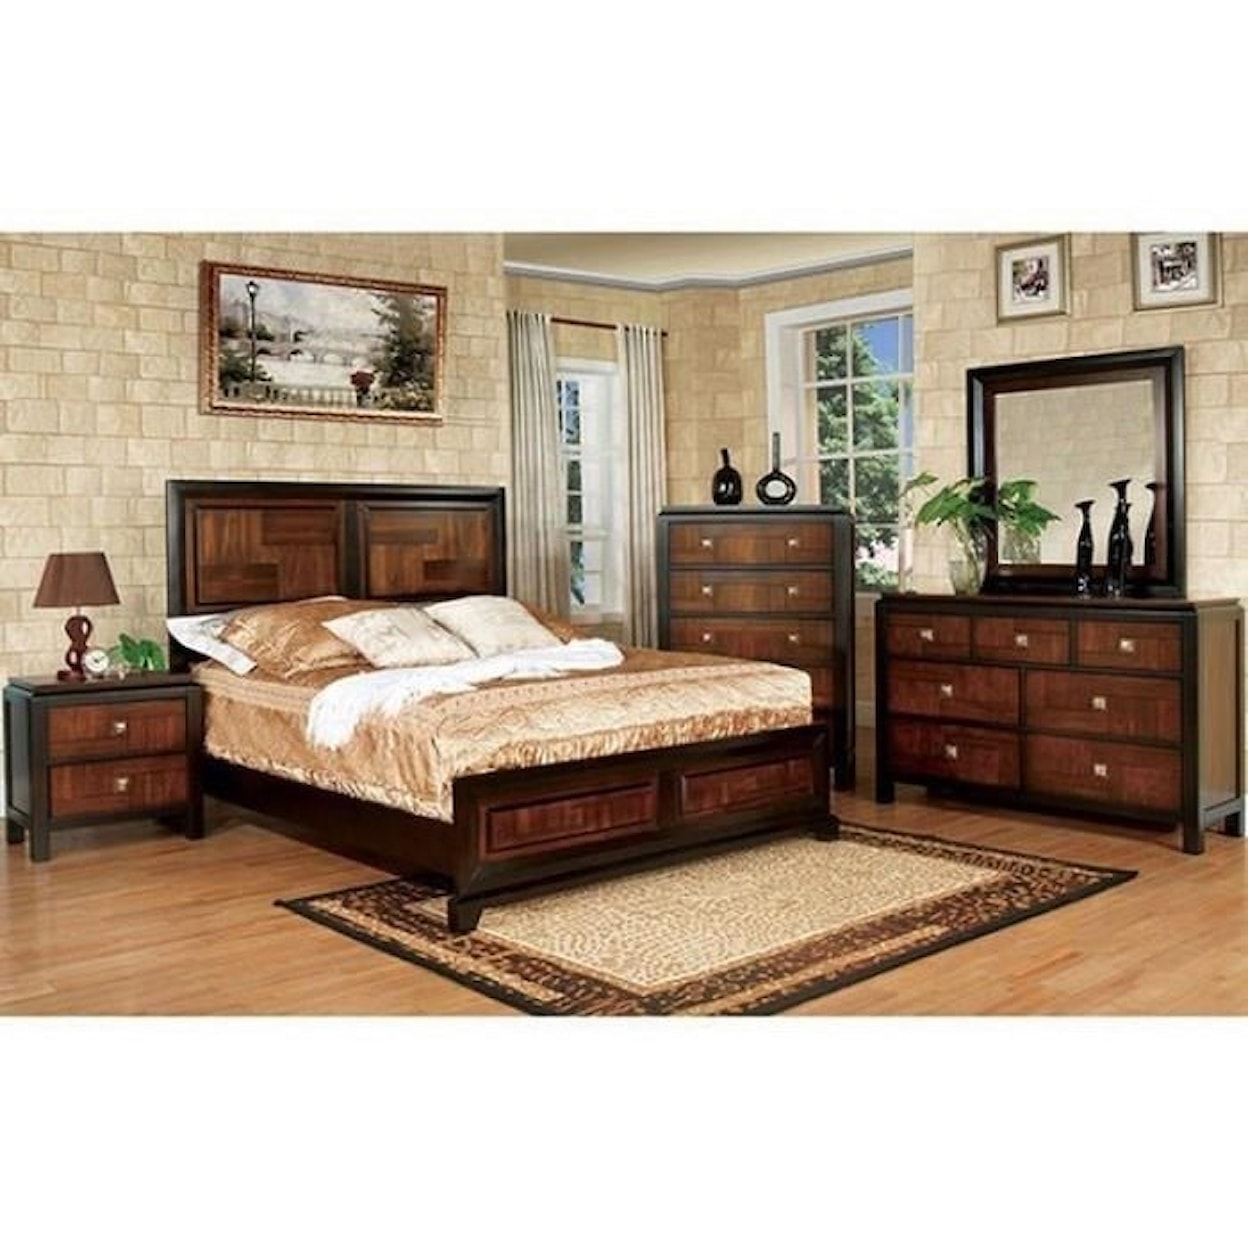 Furniture of America Patra Full Bed